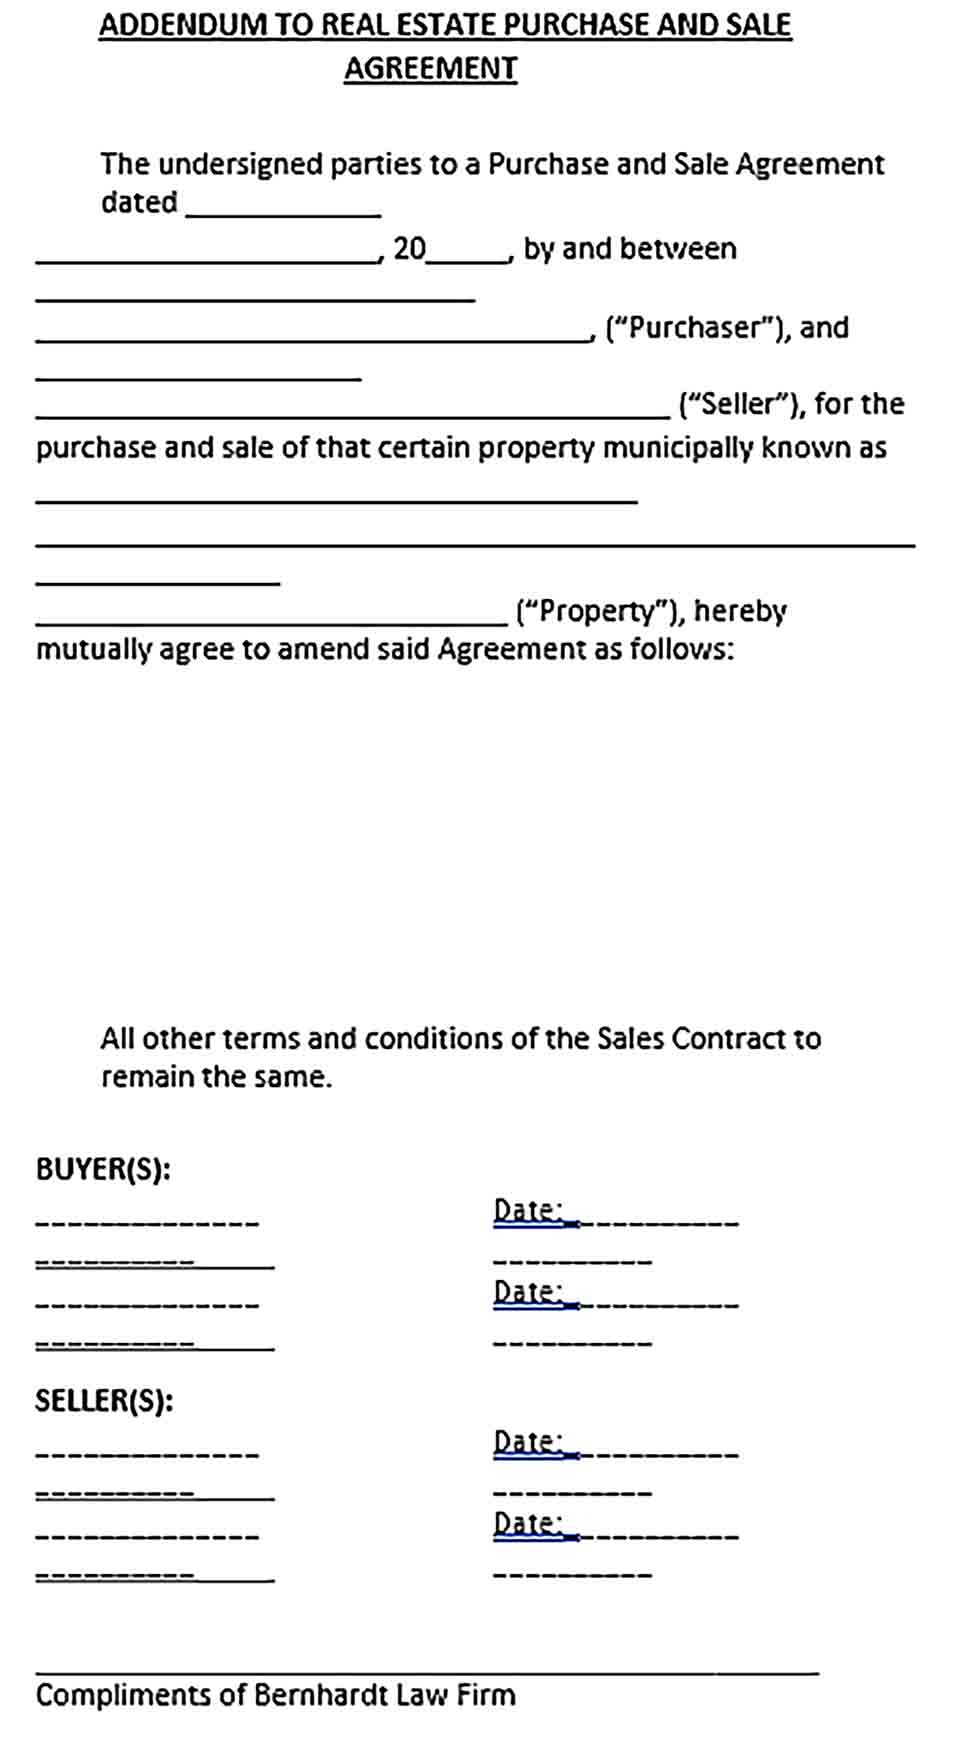 Sample Sales Addendum Agreement